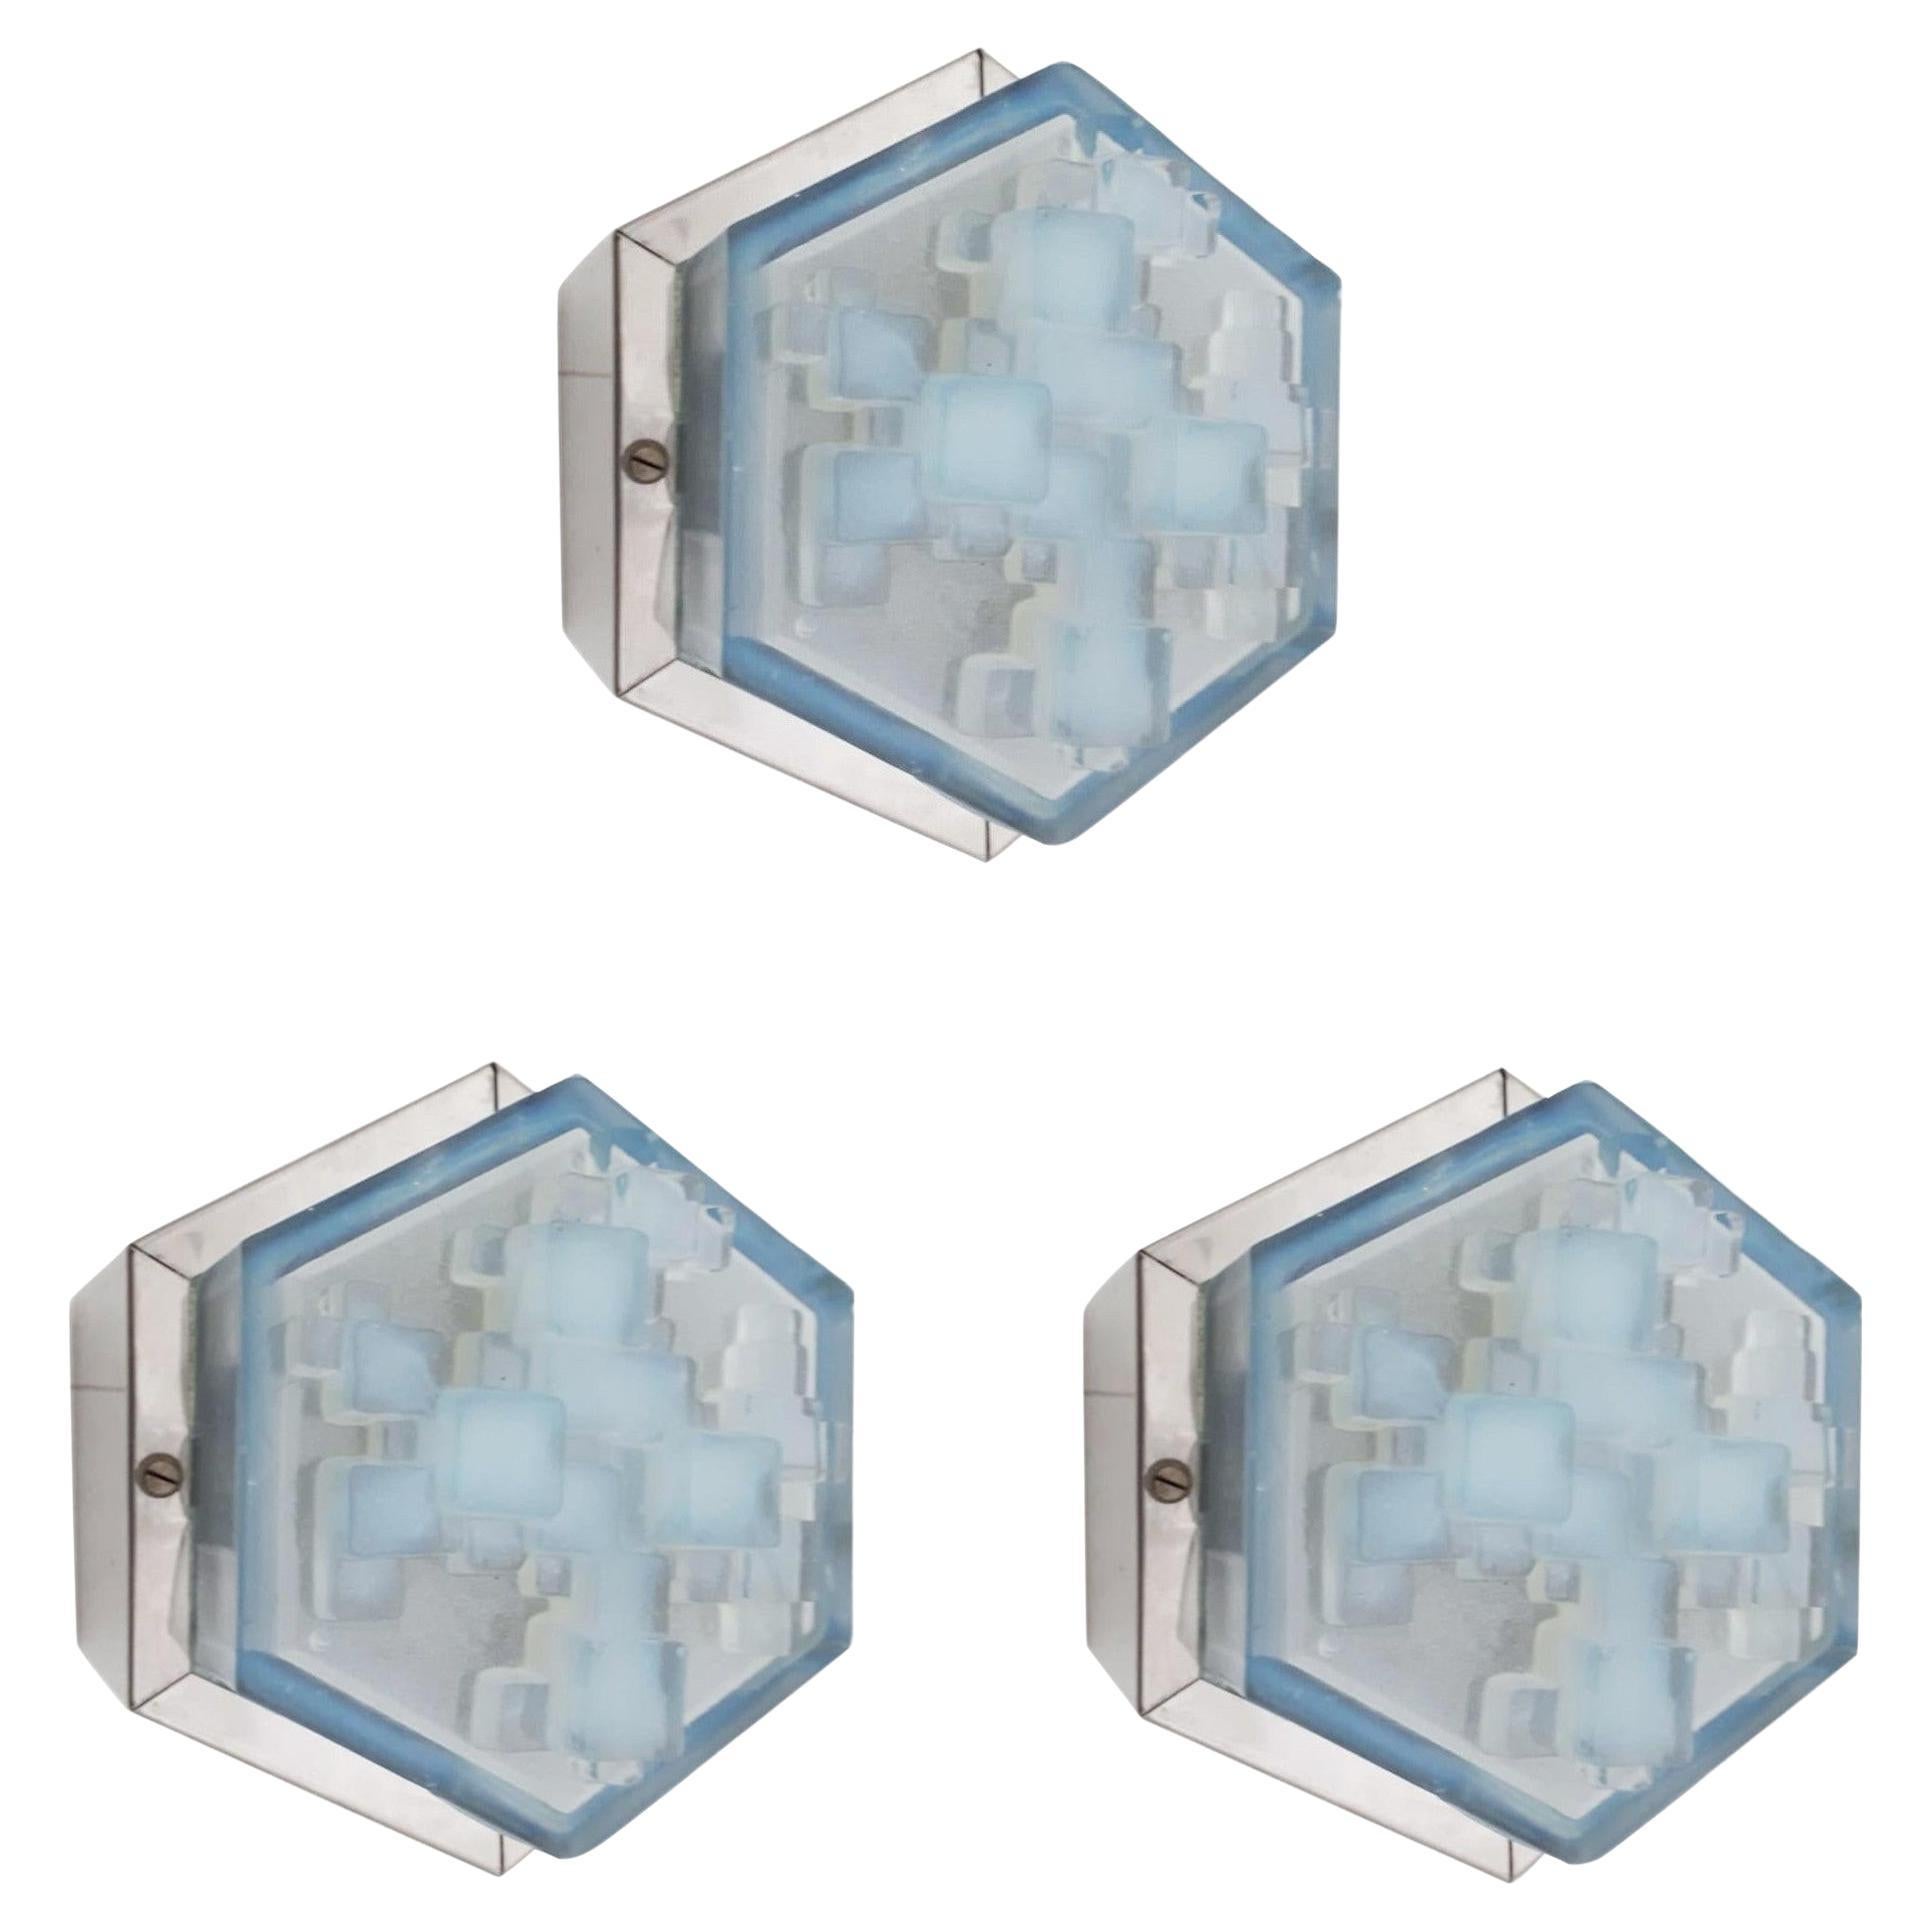 Hexagonal Modular Sconces / Flush Mounts by Poliarte - 3 available For Sale